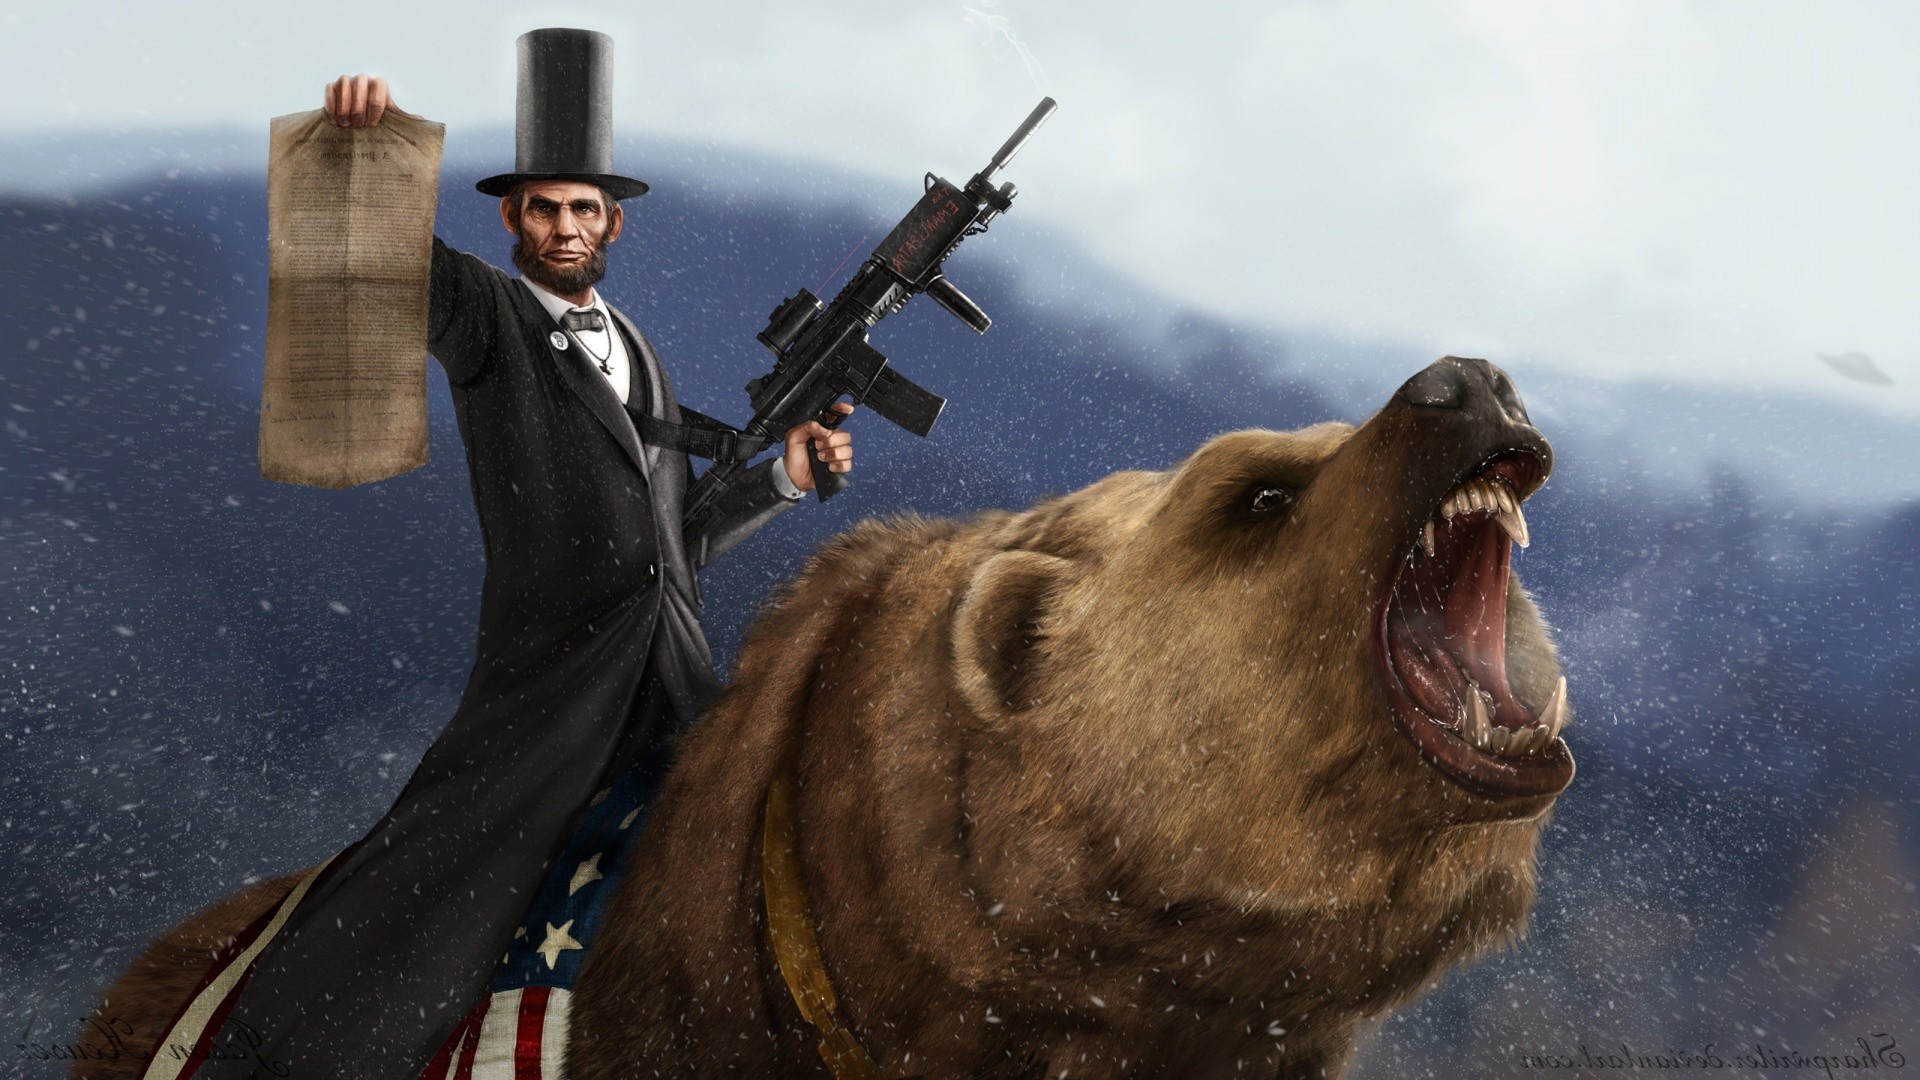 1920x1080 Abraham Lincoln riding a bear.